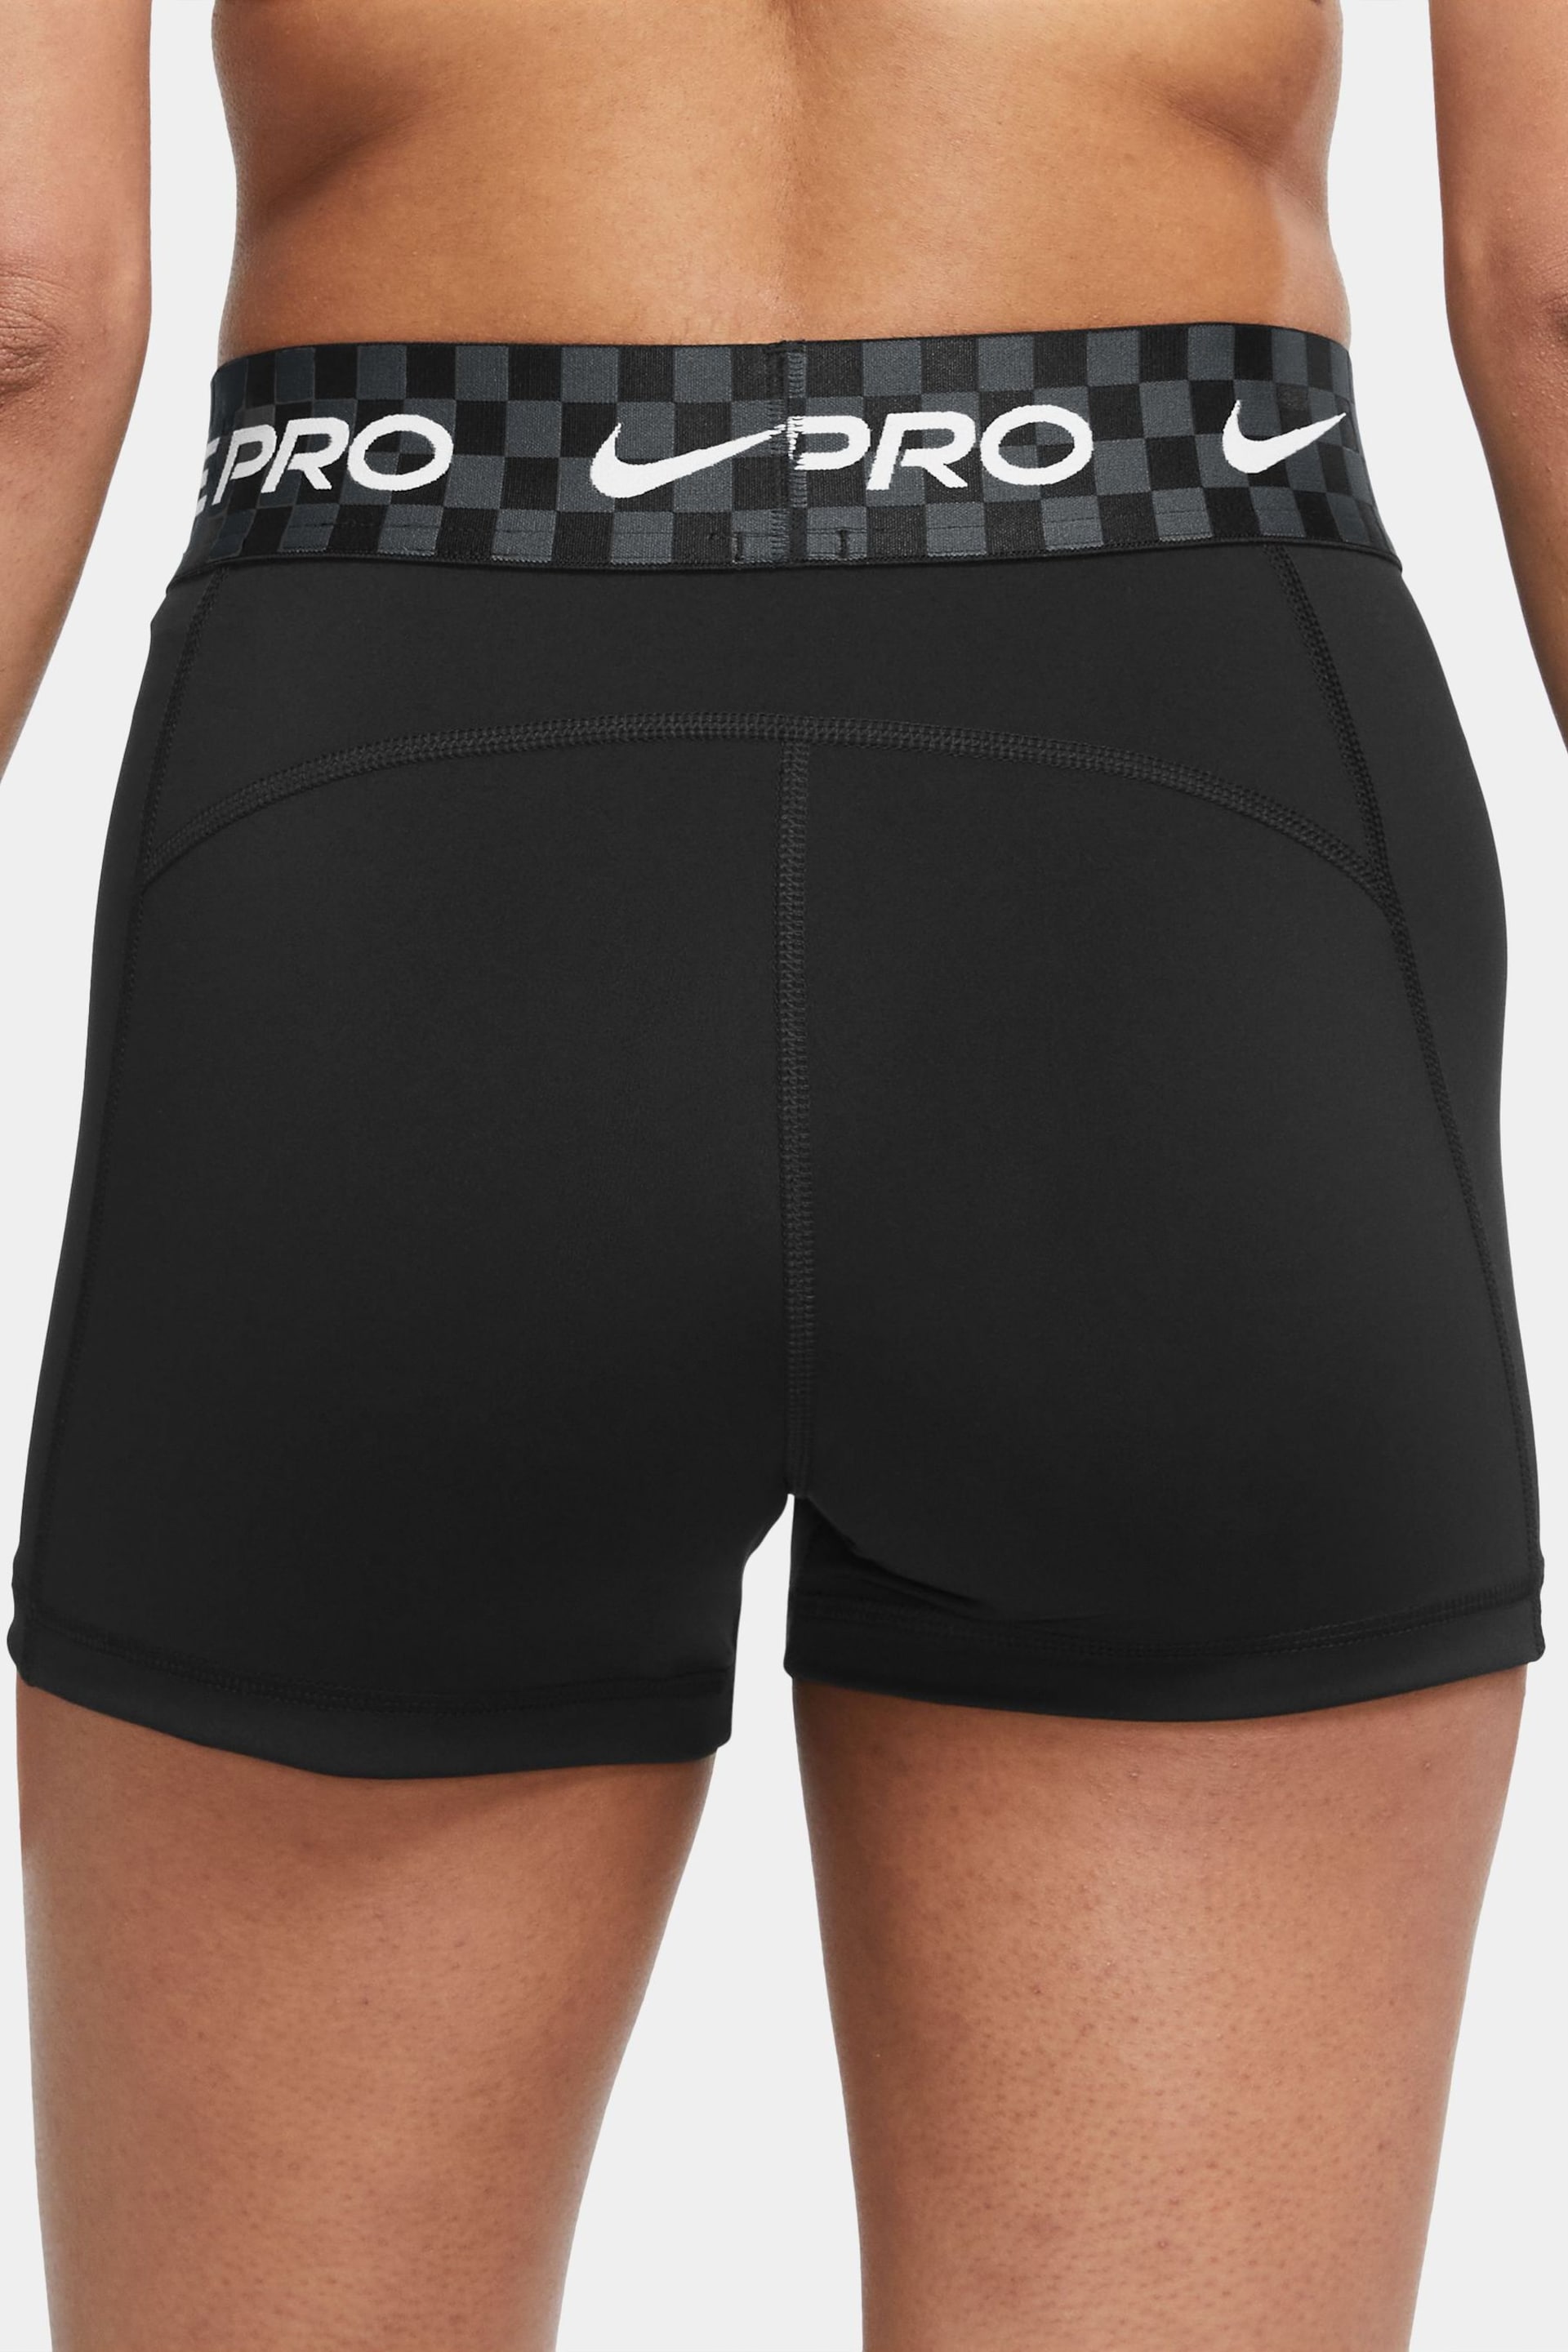 Nike Black Pro Dri-FIT 3-Inch Shorts - Image 2 of 4